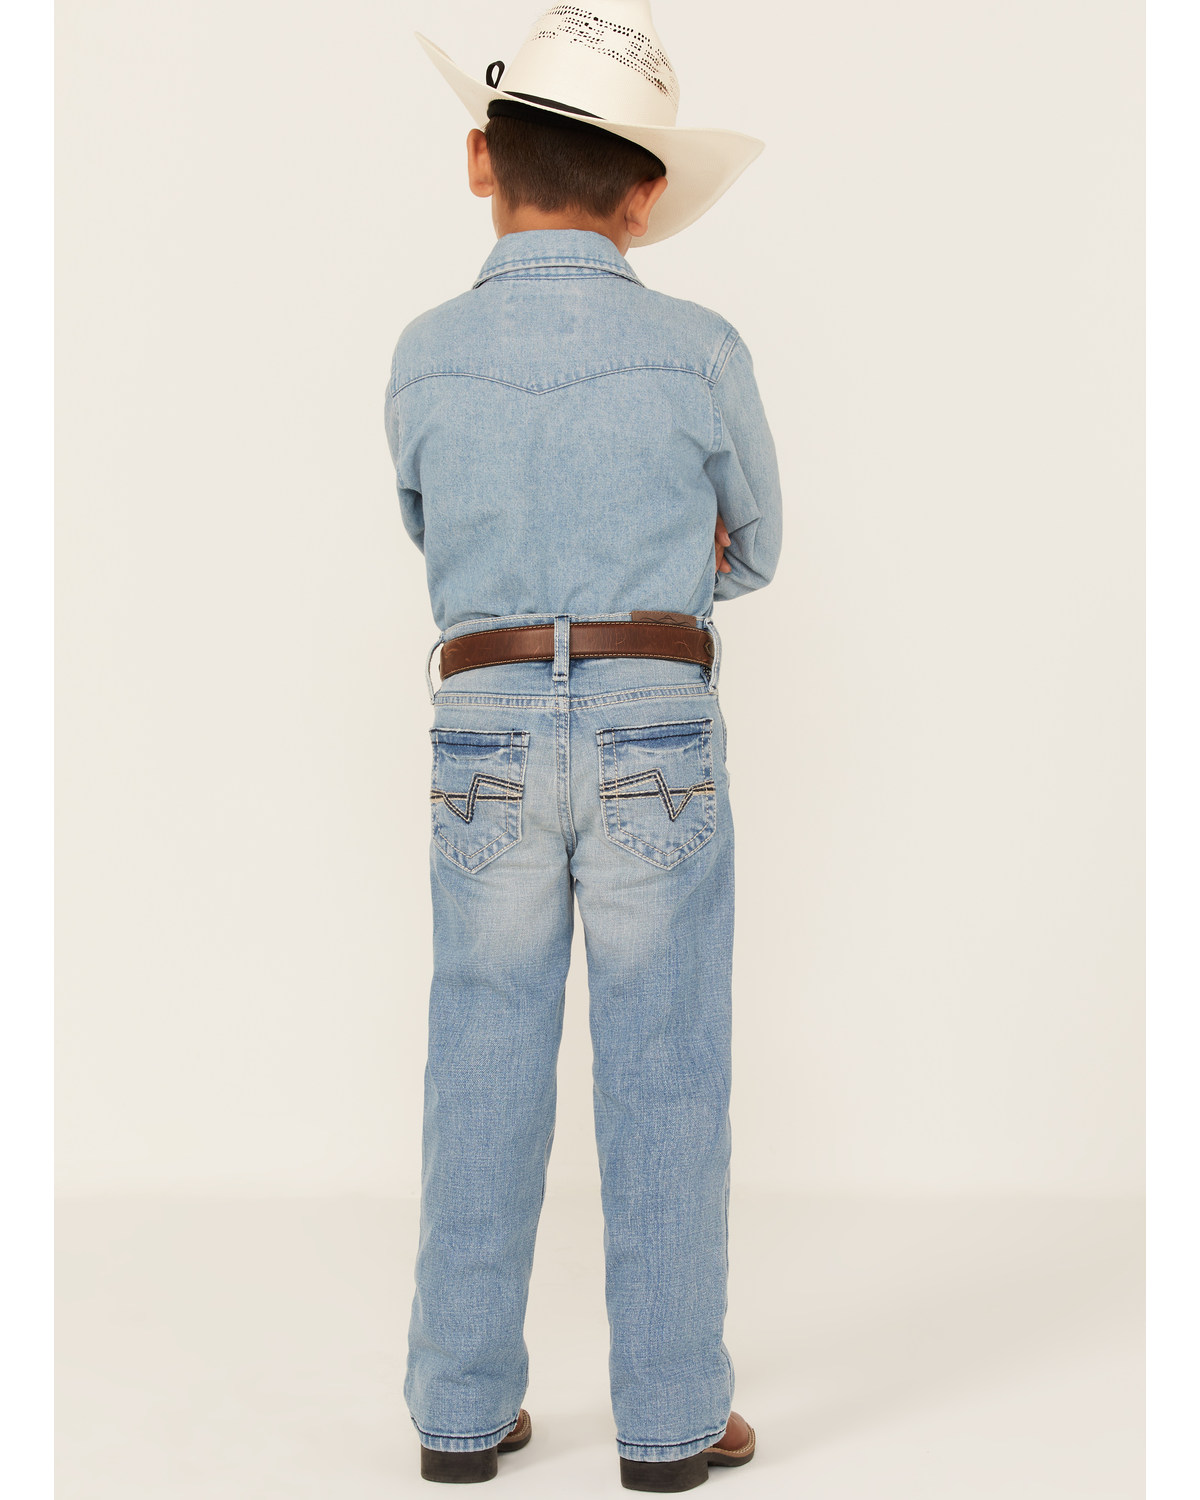 Cody James Boys' Arlo Light Wash Slim Bootcut Jeans - Sizes 4-8